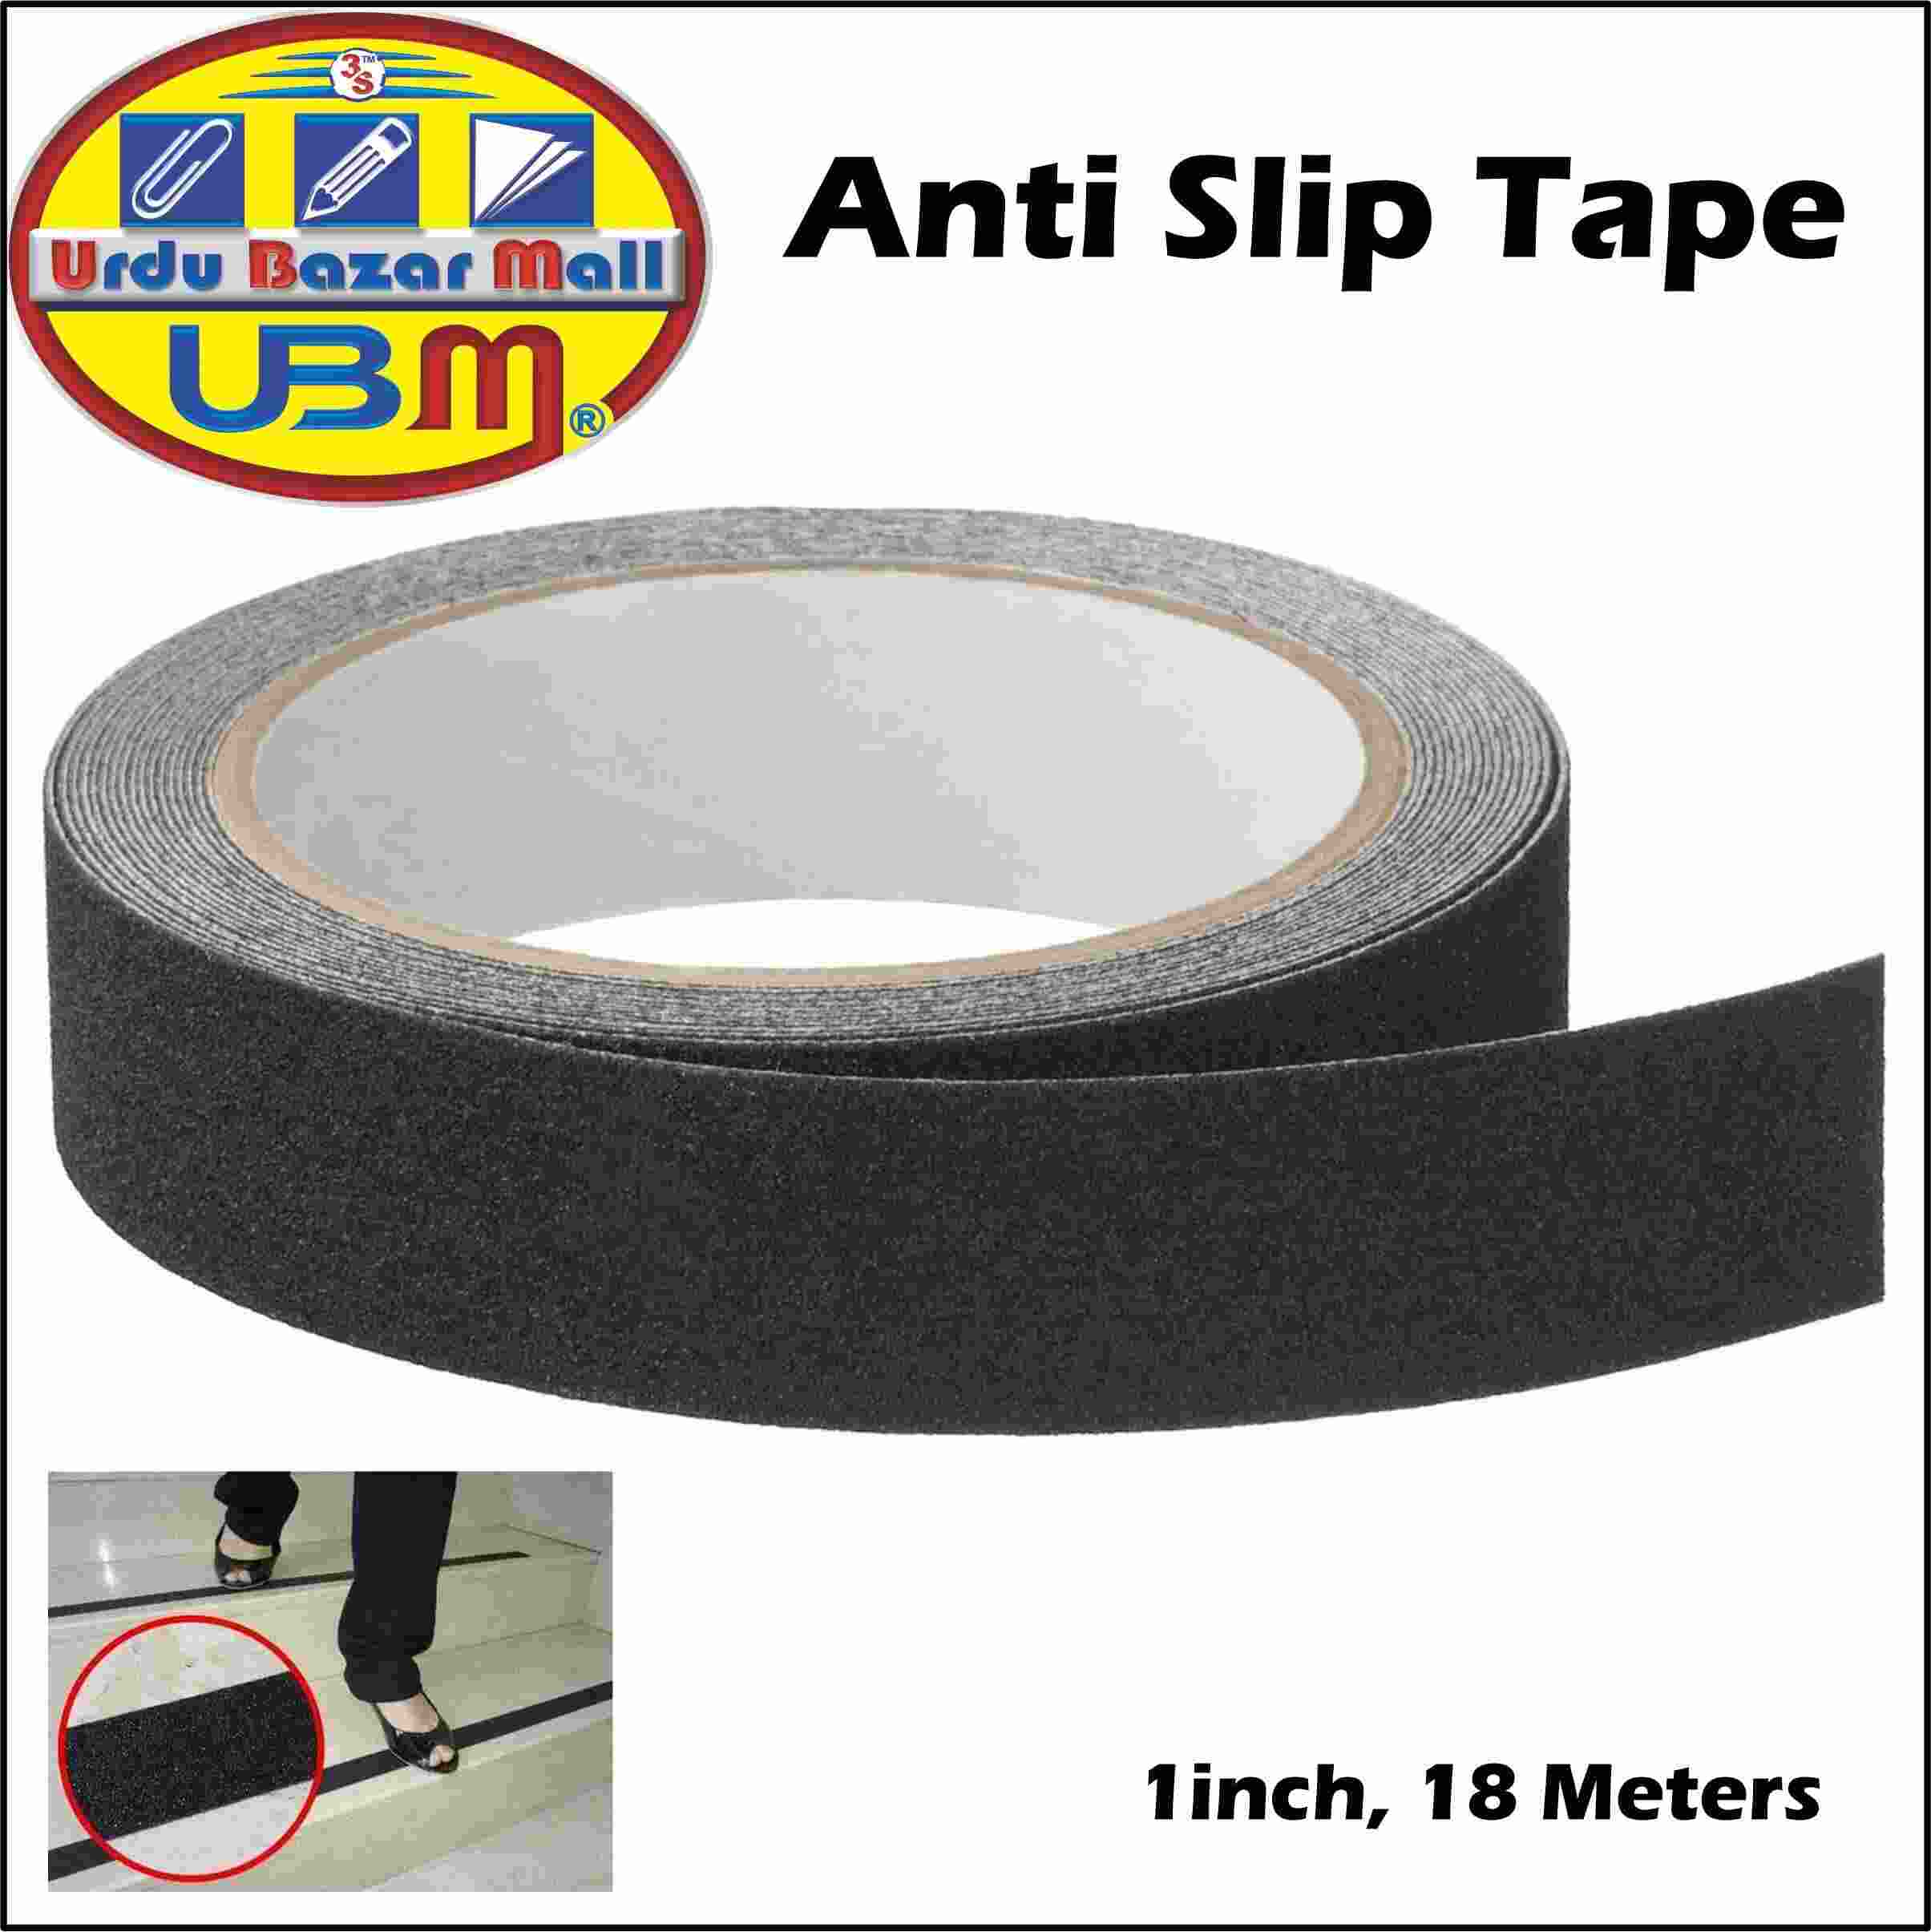 Anti Slip Tape 1 inch x 18 Meters